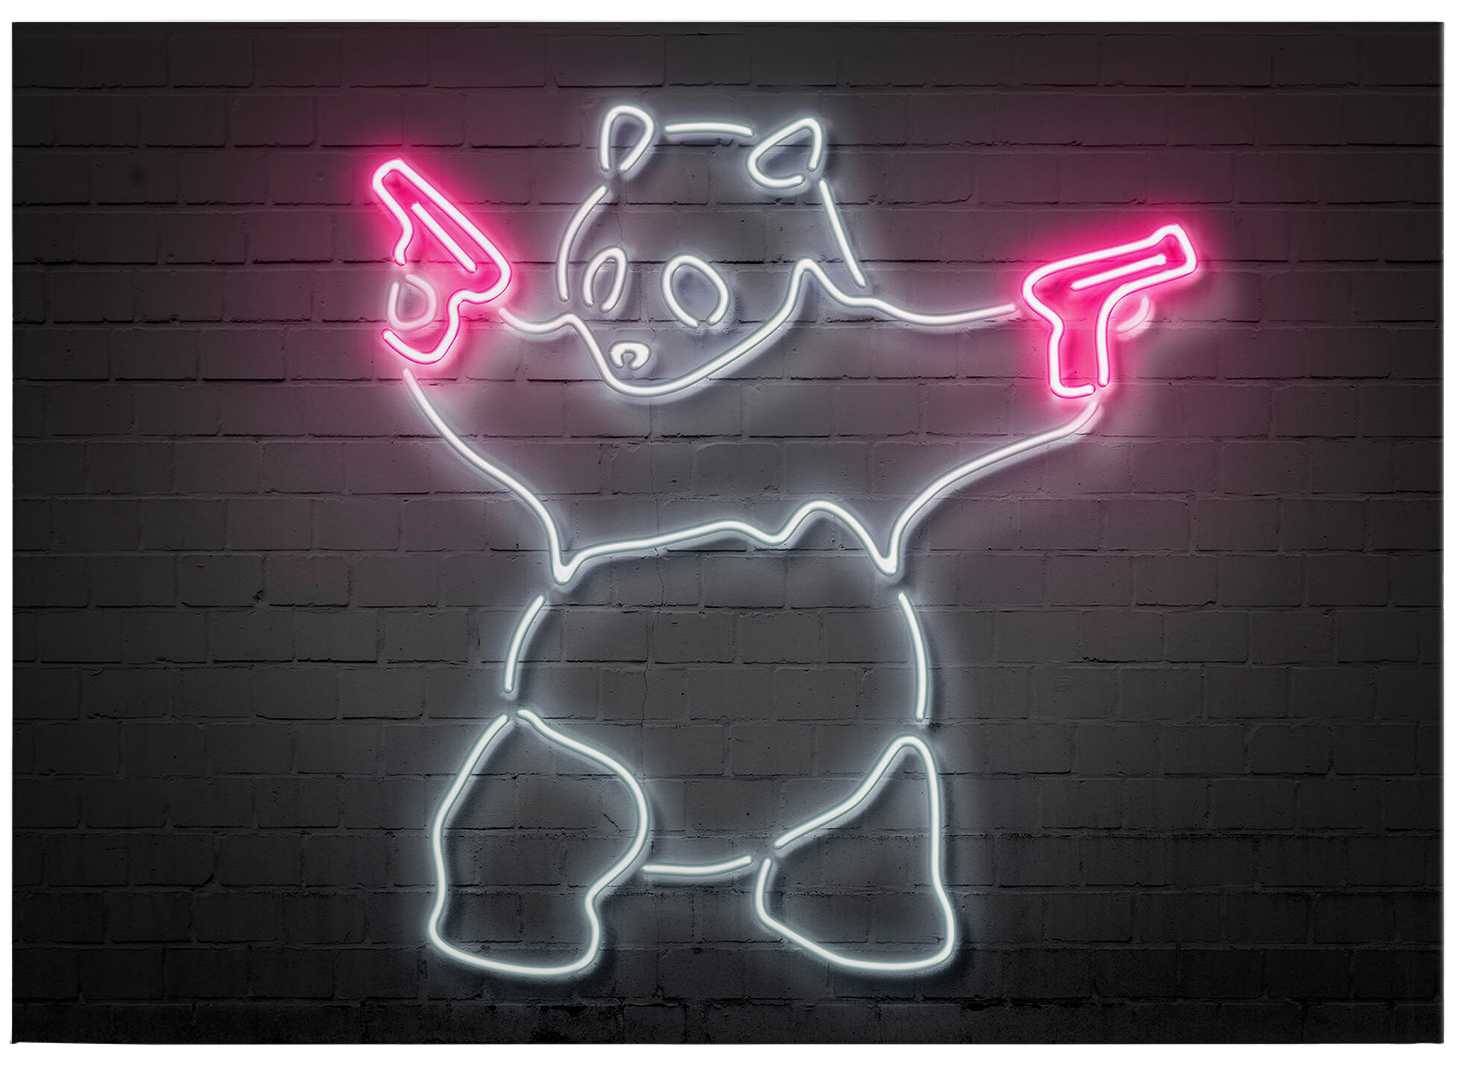             Cuadro Neon sign "Panda" by Mielu - 0,70 m x 0,50 m
        